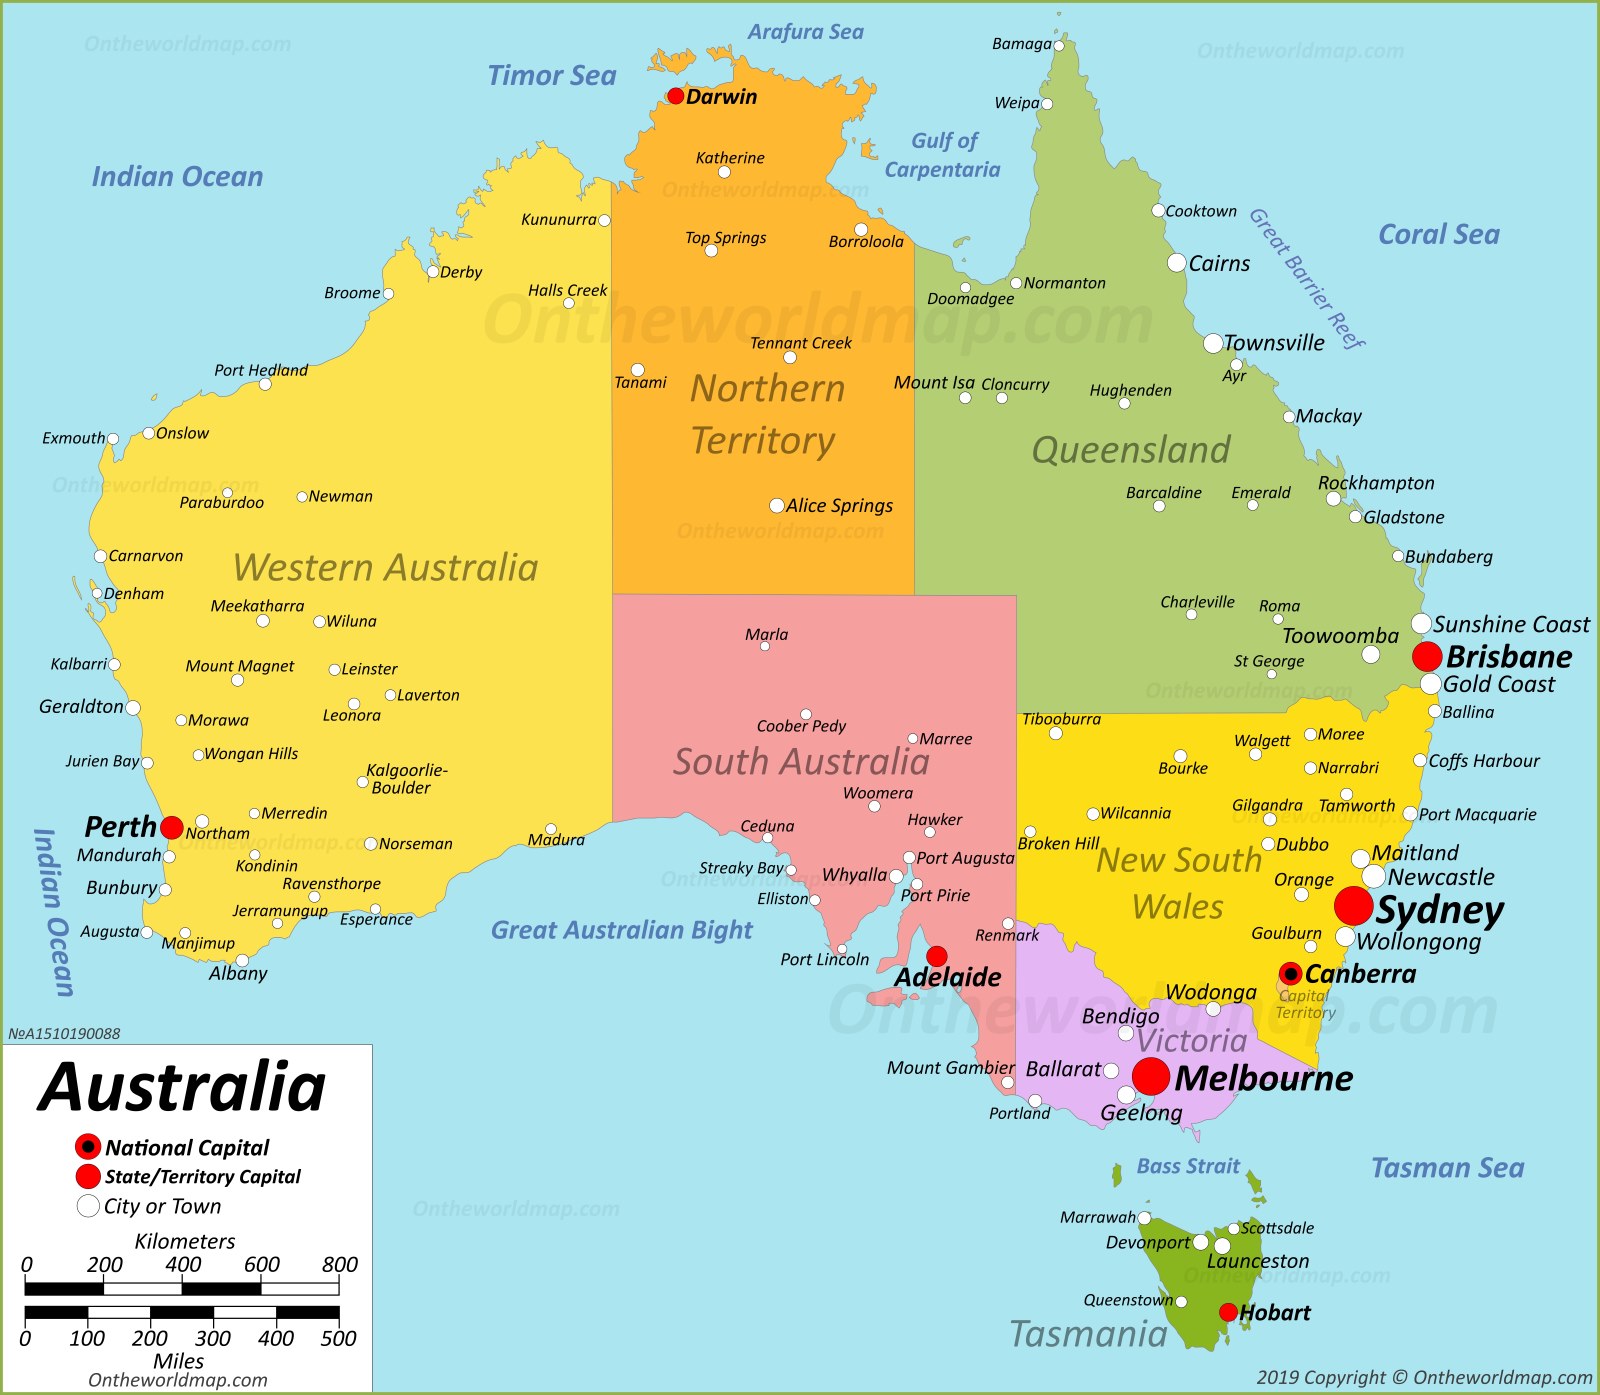 Proxy.php?image=http   Ontheworldmap.com Australia Australia Map 1600 &hash=e2fb9024d27b79220c13d113a84cc403